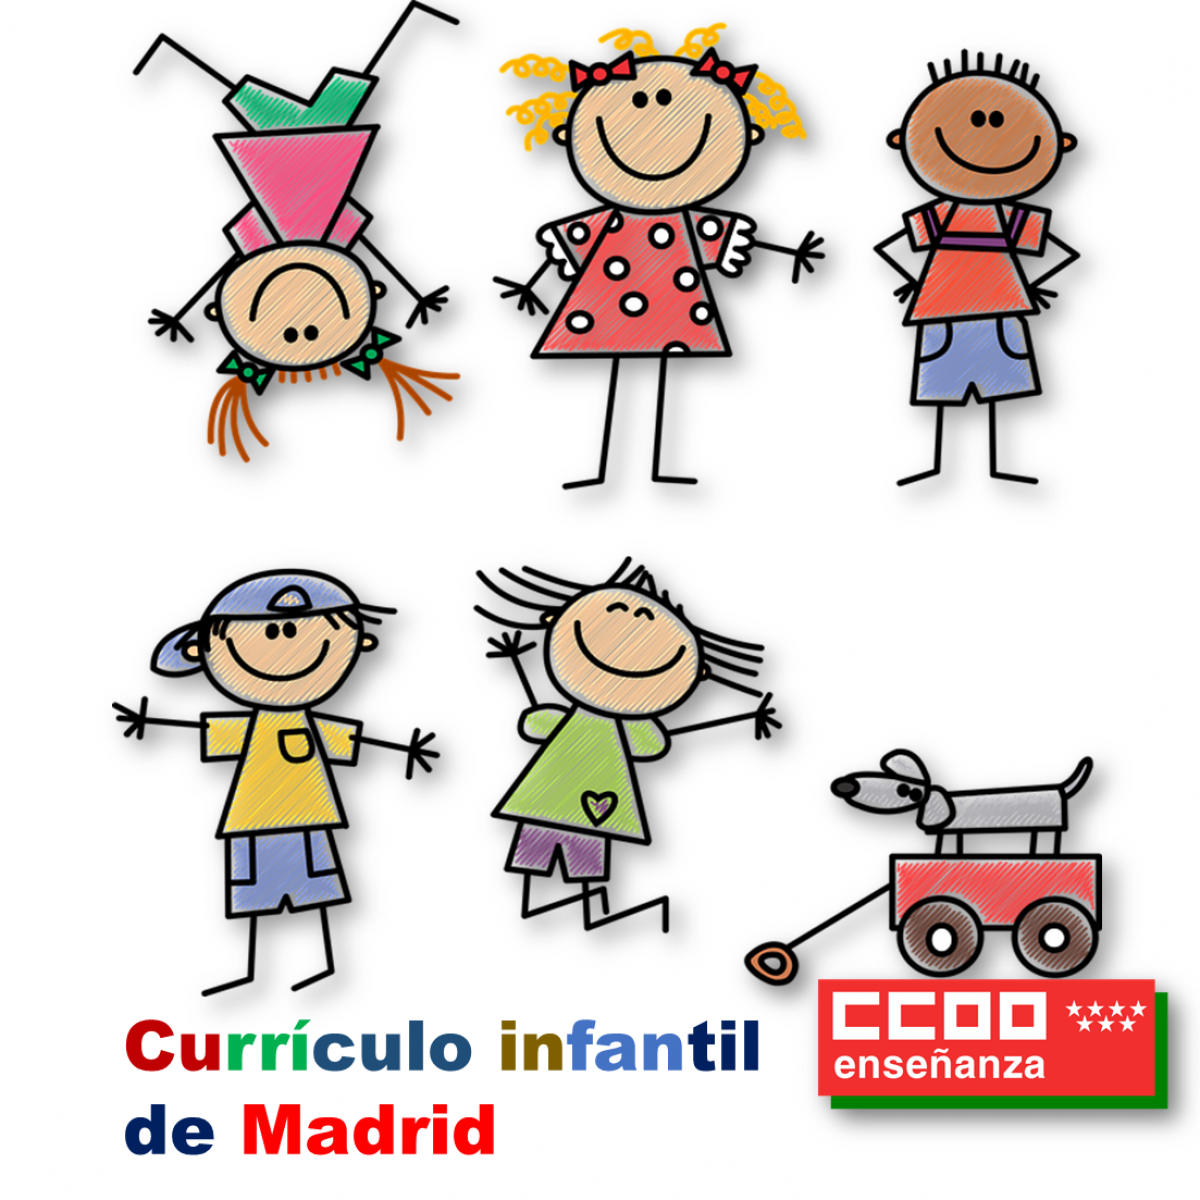 Currículo infantil de Madrid